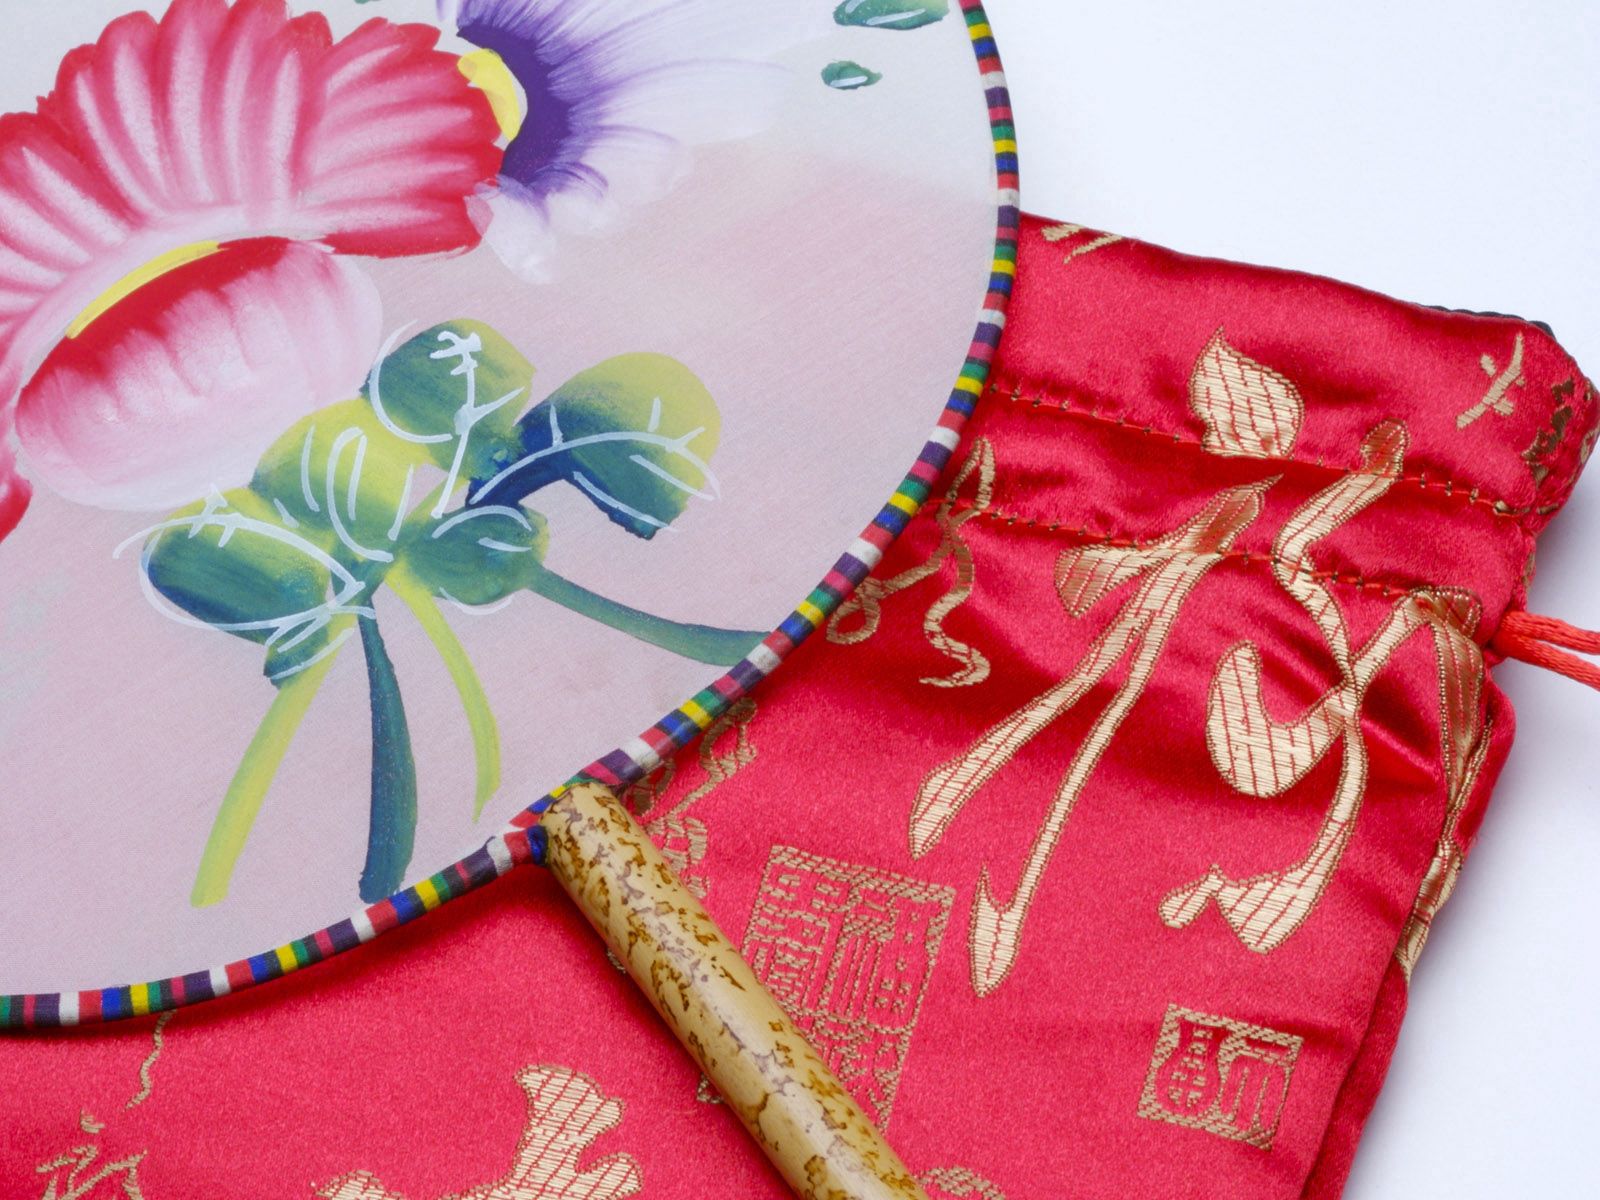 miscellanea, miscellaneous, cloth, china, fan, embroidery